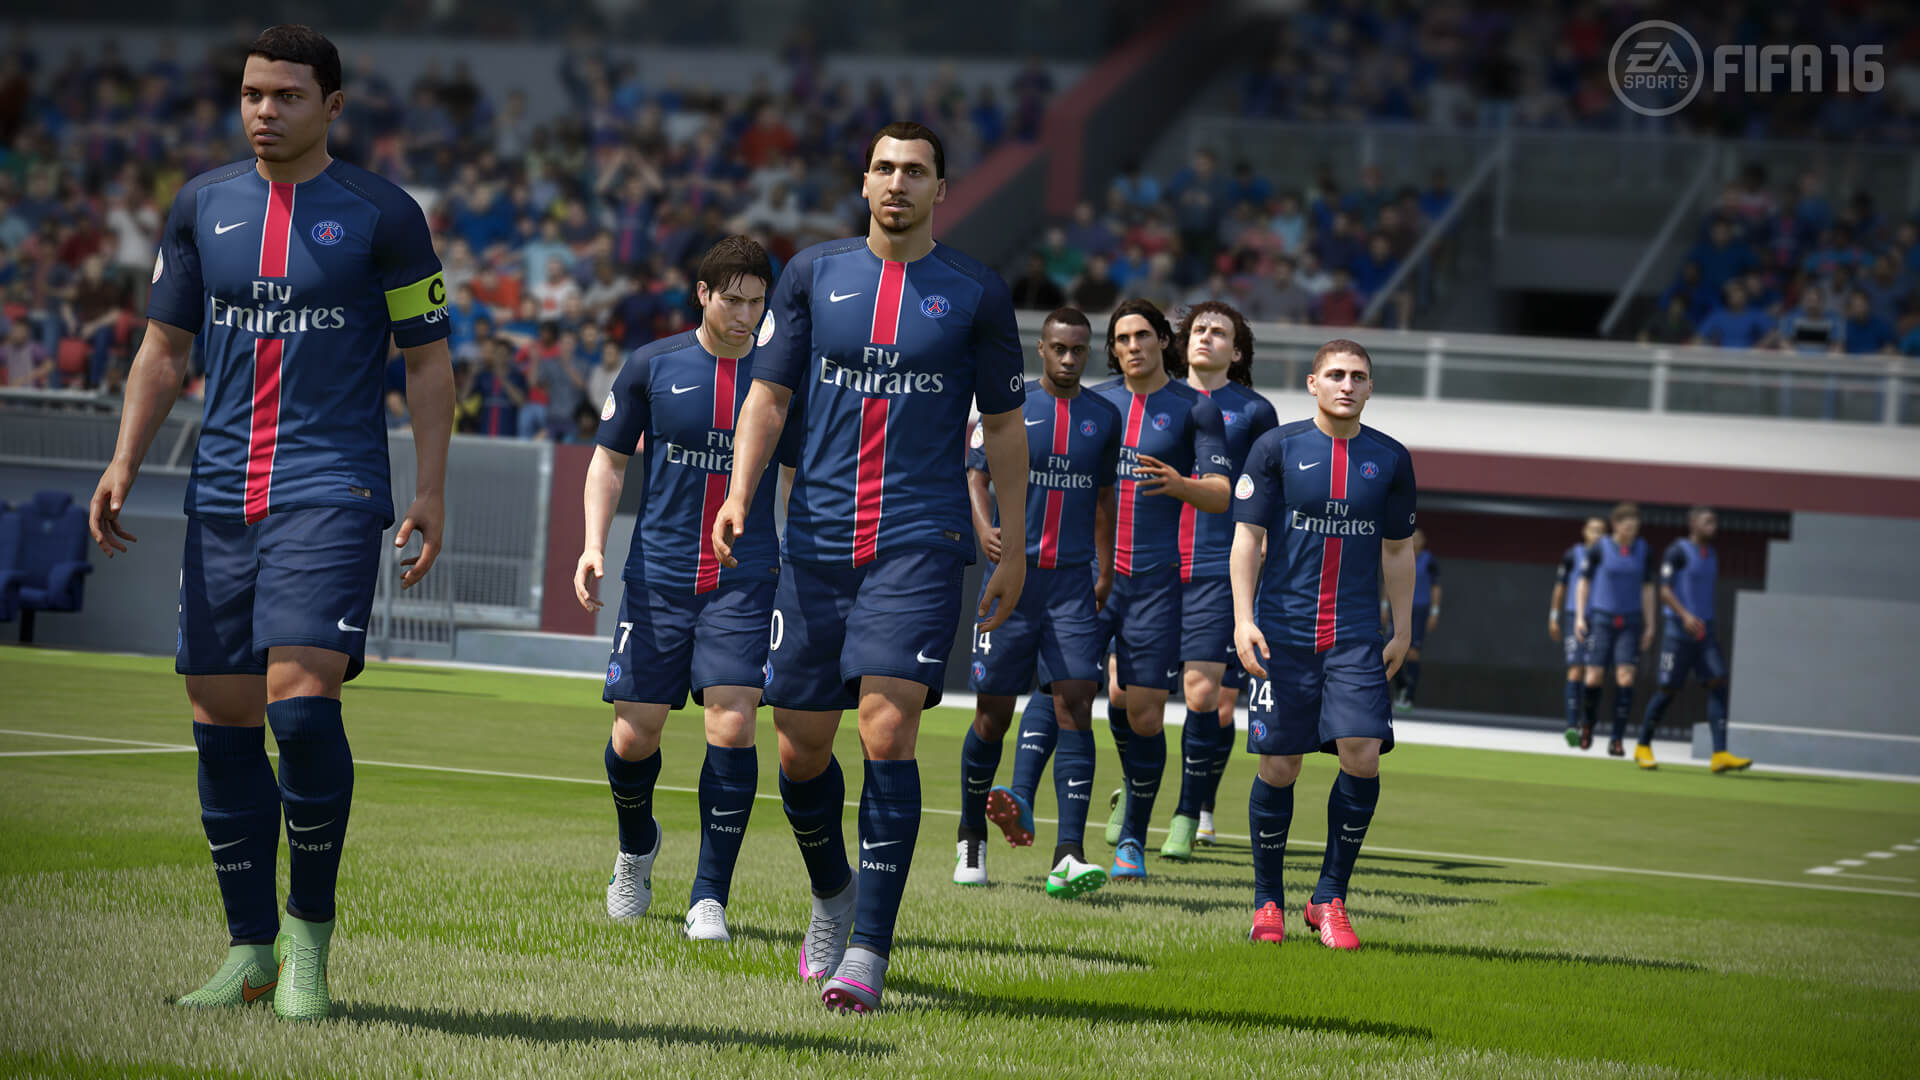 FIFA 16: FIFA Ultimate Team Draft tips